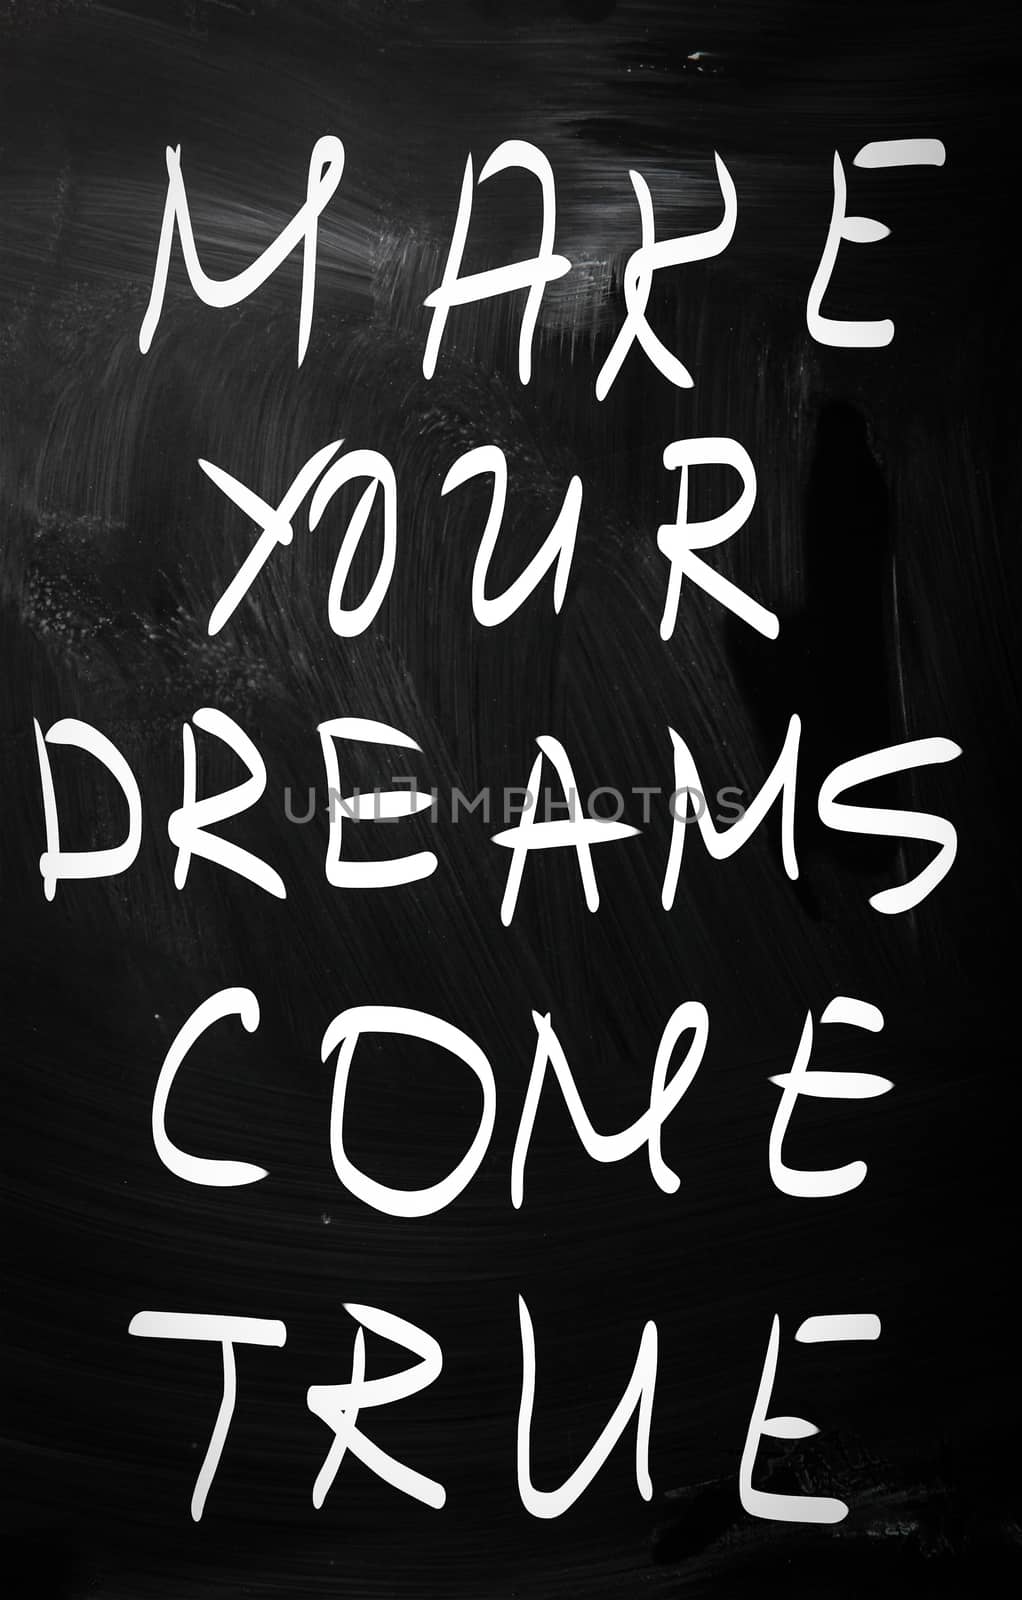 "Make your dreams come true" handwritten with white chalk on a blackboard